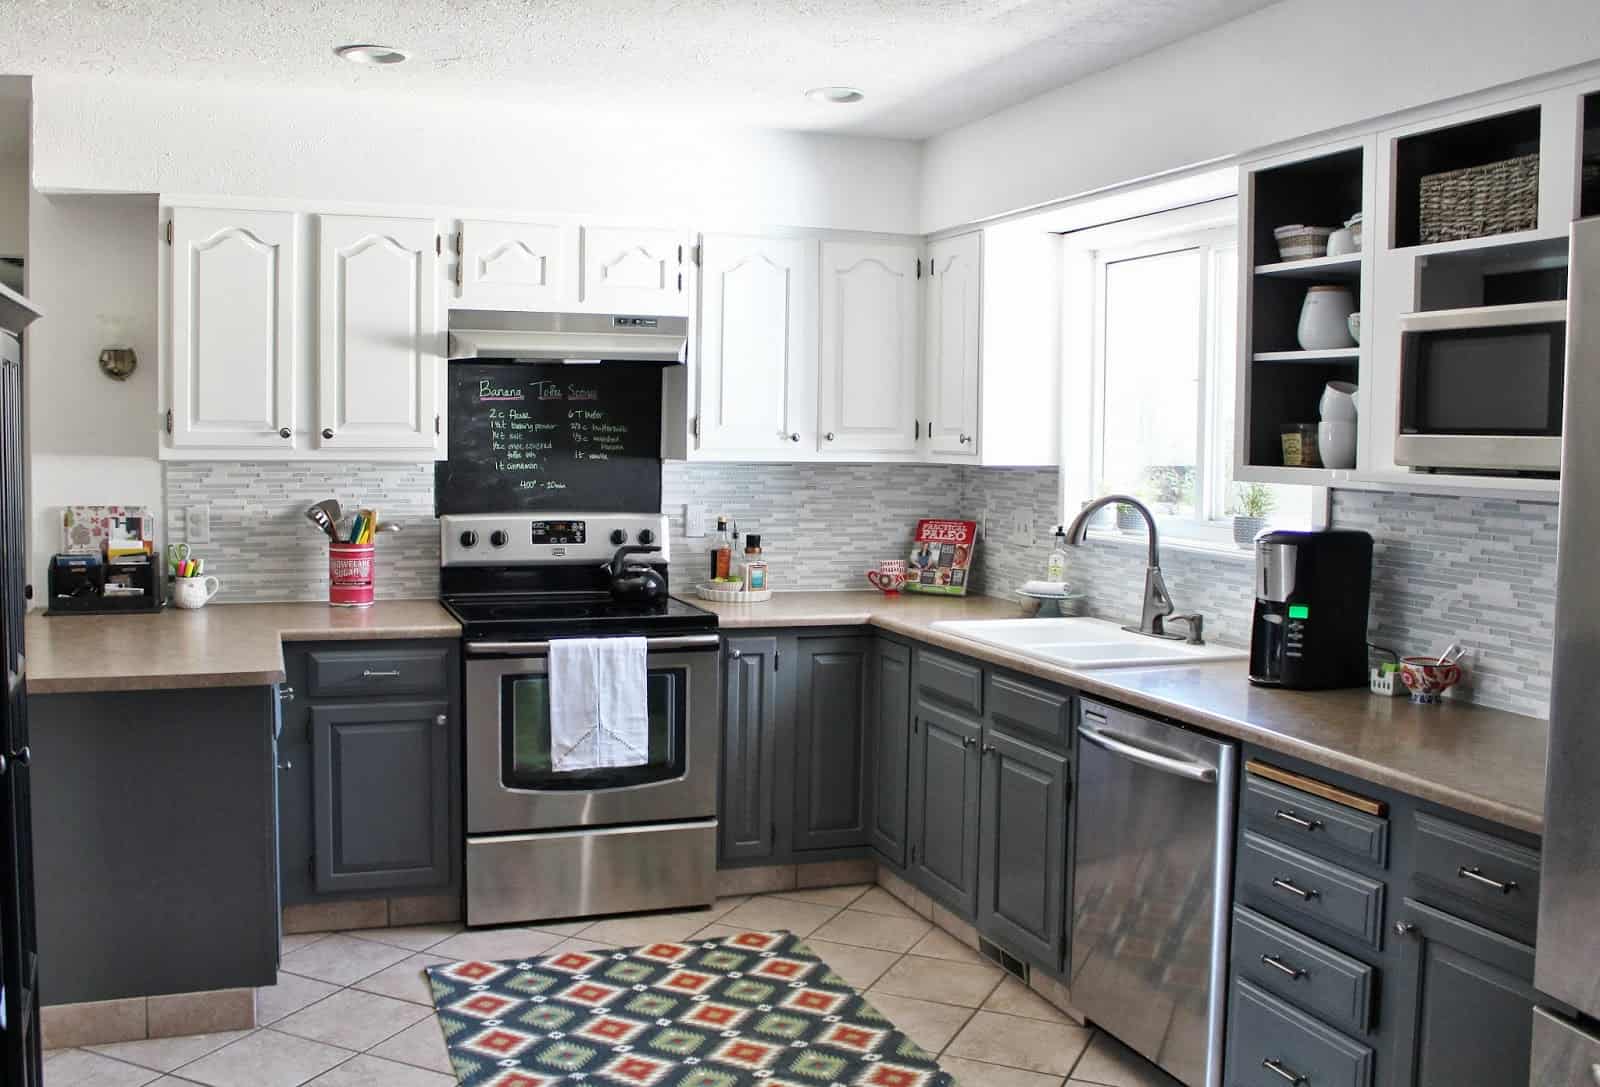 modern white and grey kitchens